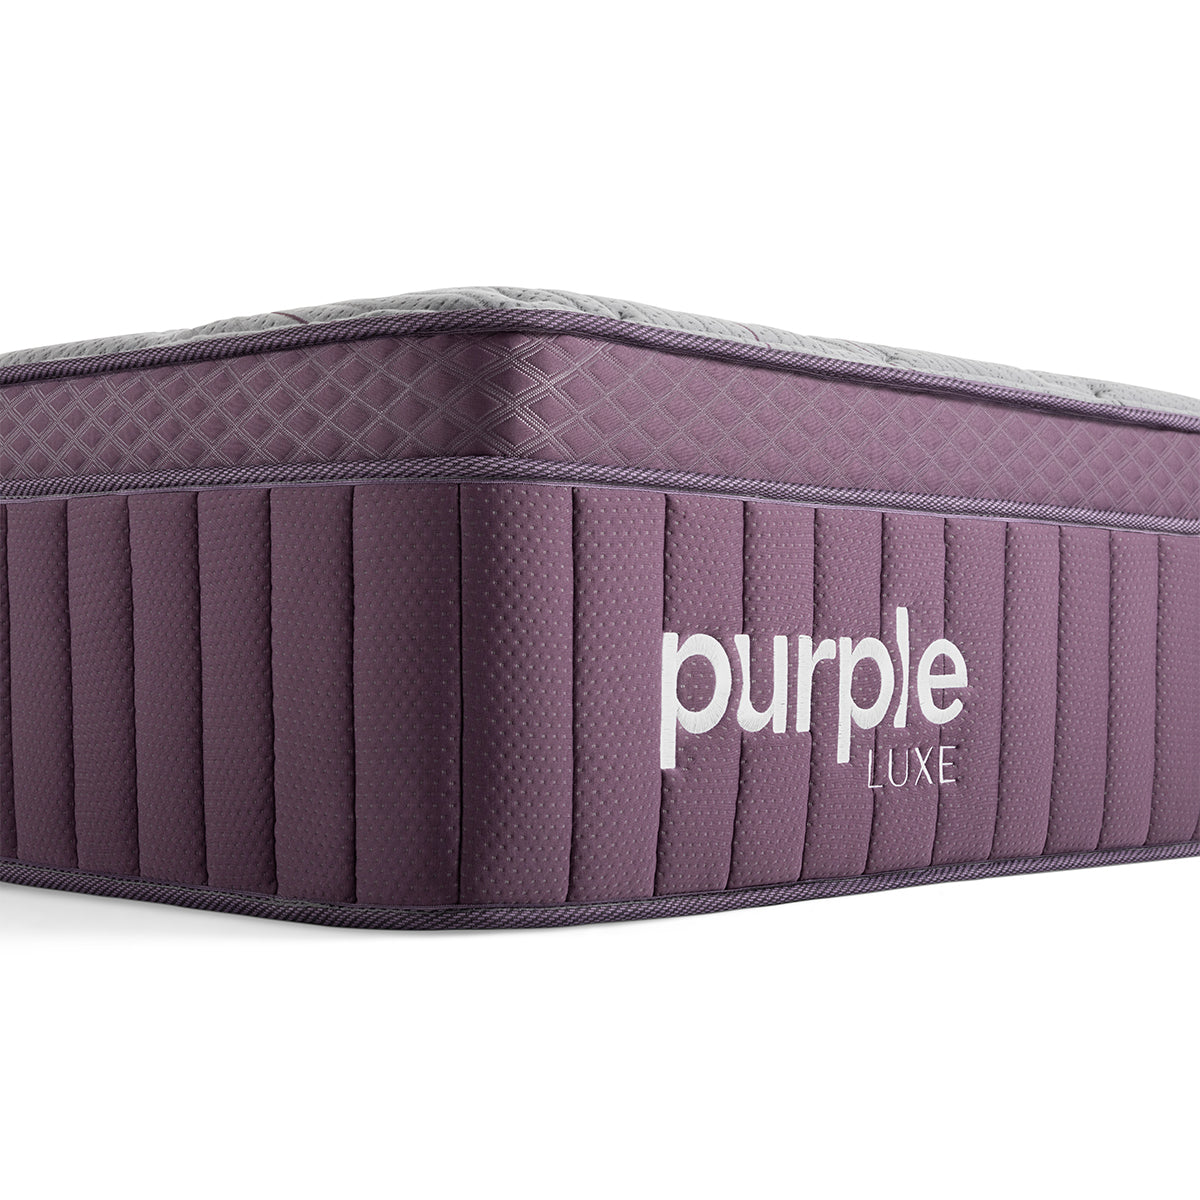 Purple Rejuvenate Plus Mattress corner detail